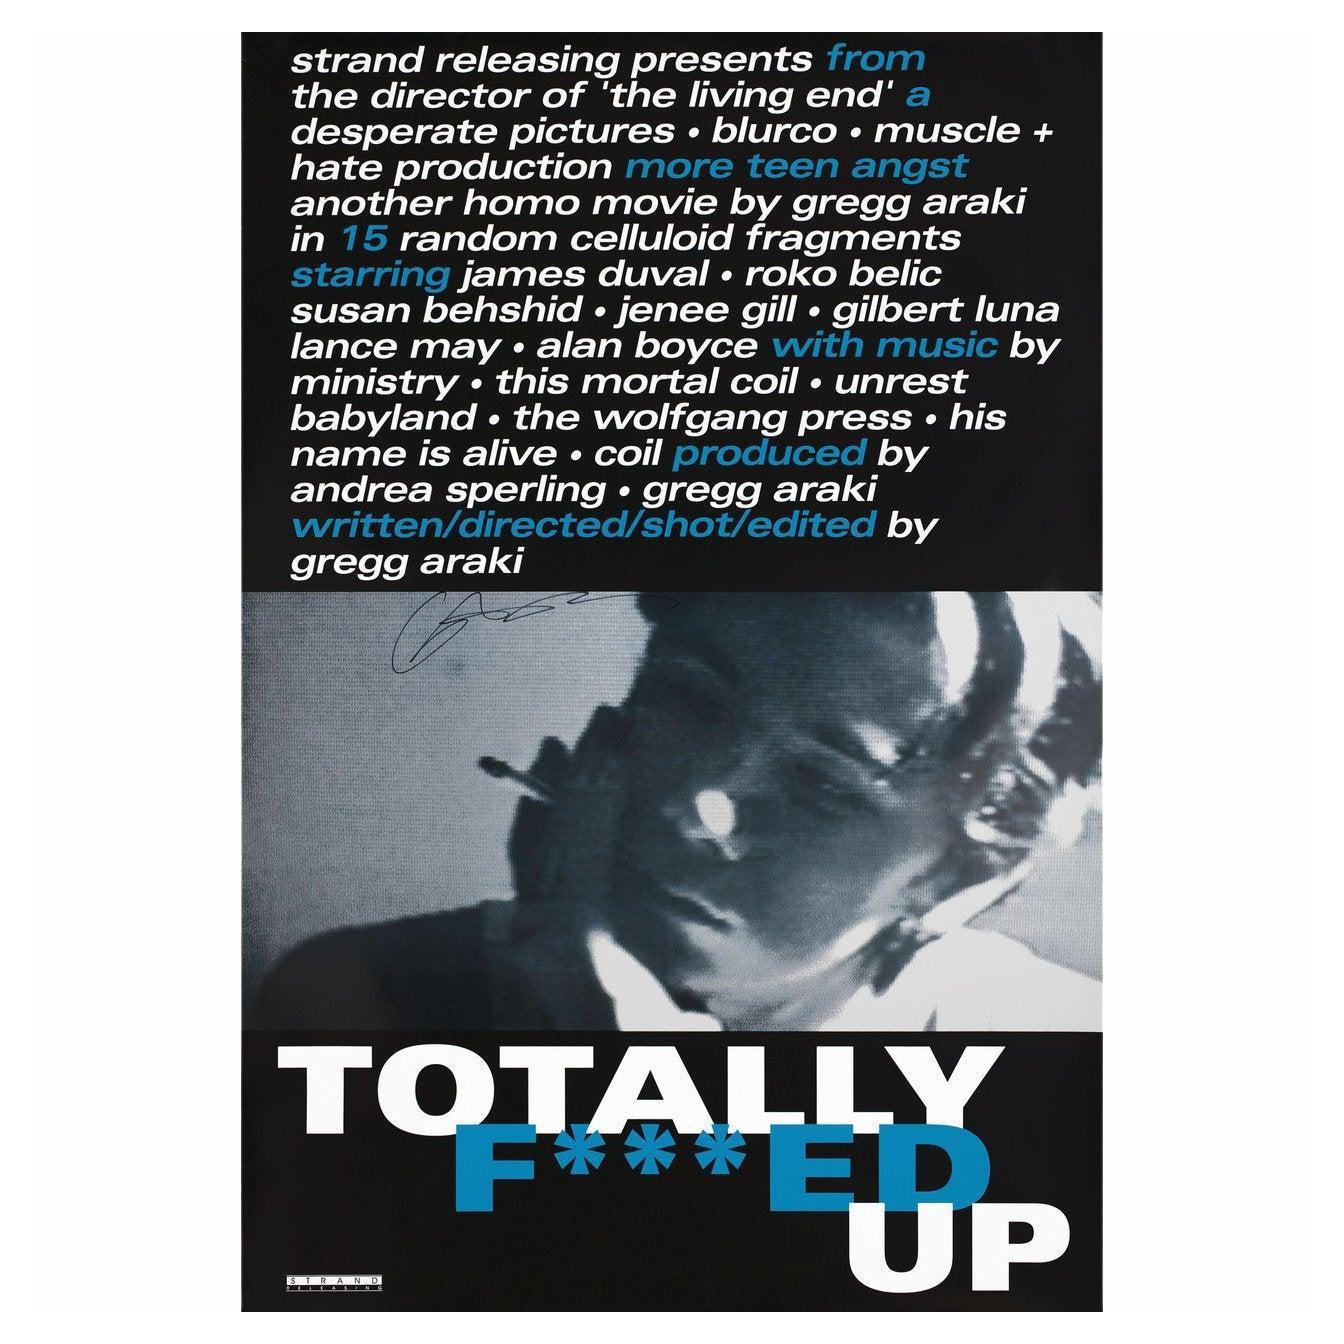 Affiche du film U.S. One Sheet signée Totally F***ed Up, 1993